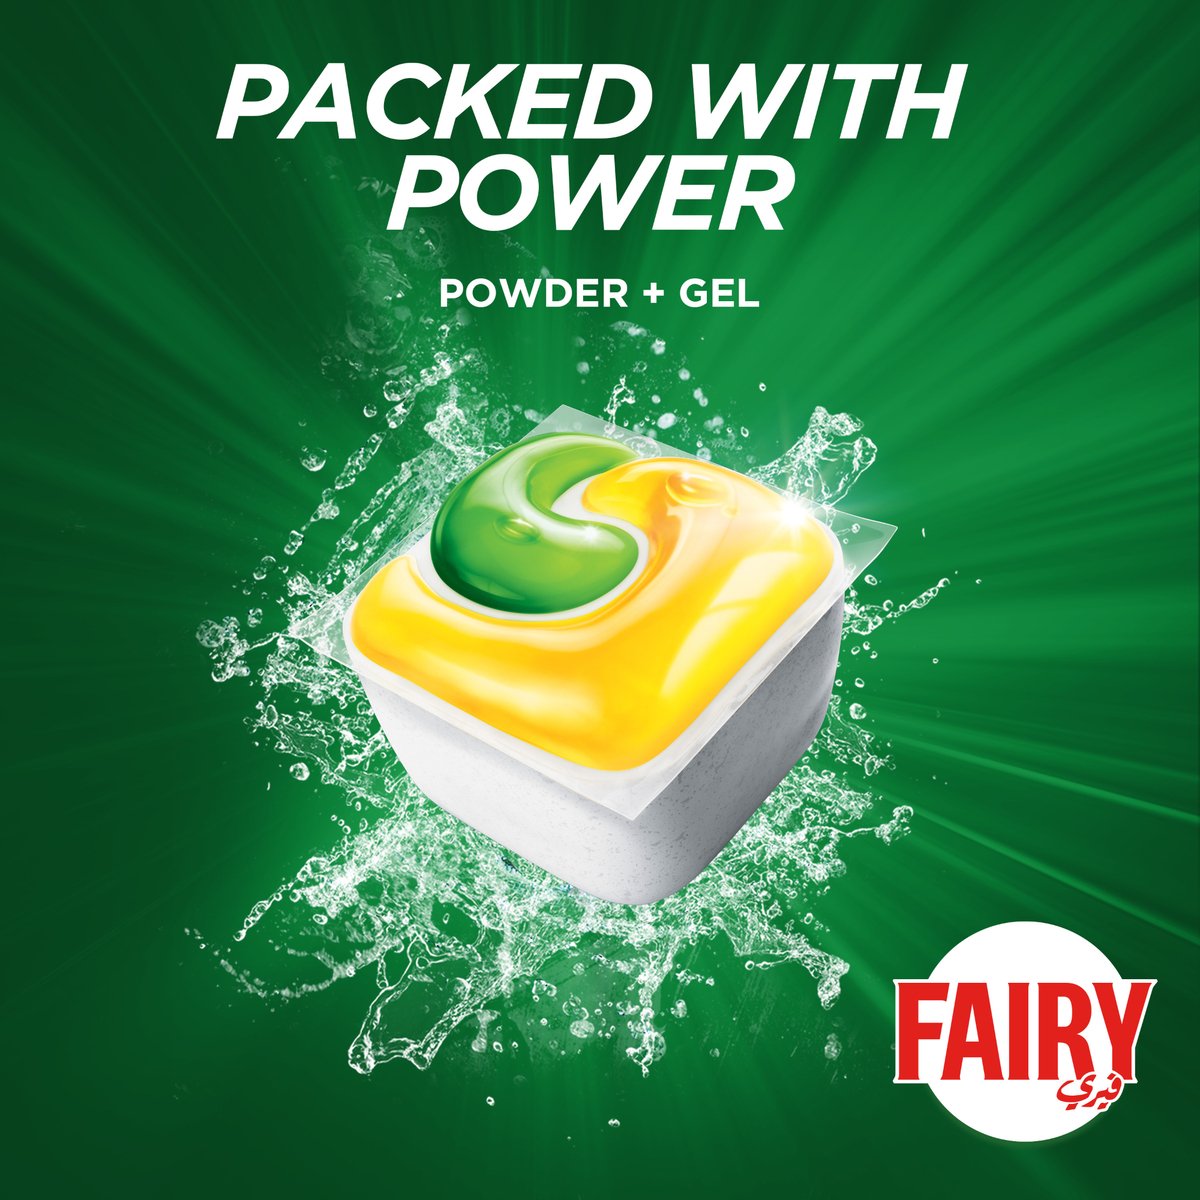 Fairy Platinum Plus Automatic Dishwashing Tablets 70 pcs